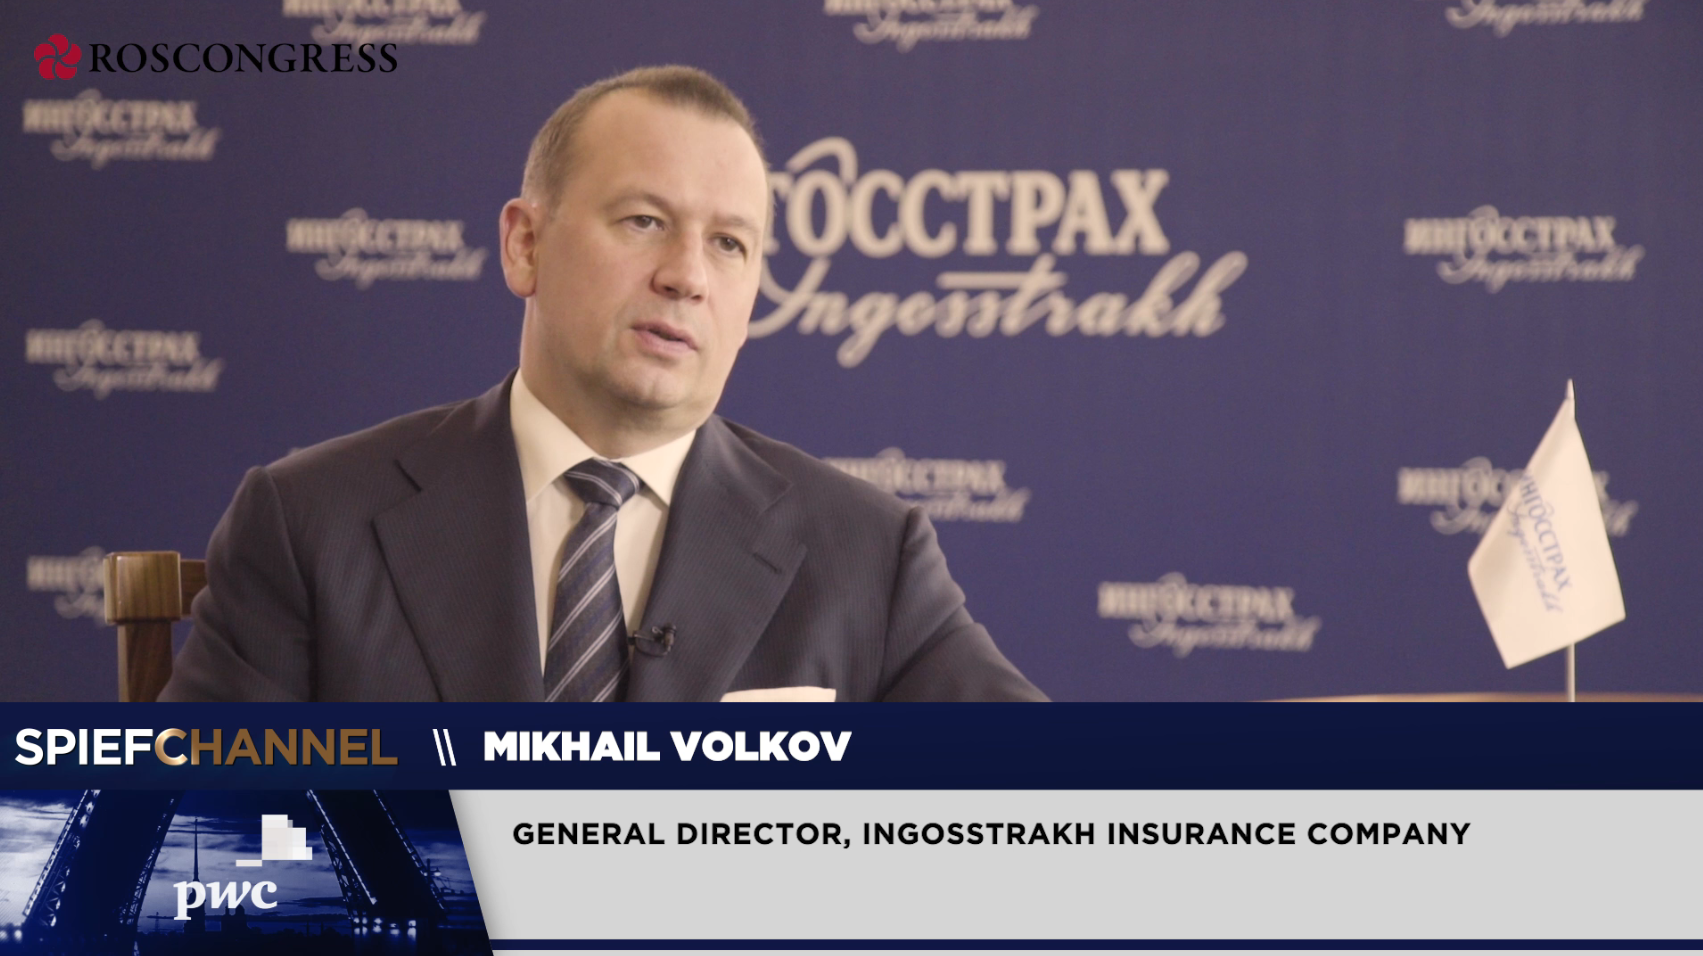 Mikhail Volkov, General Director, Ingosstrakh Insurance Company